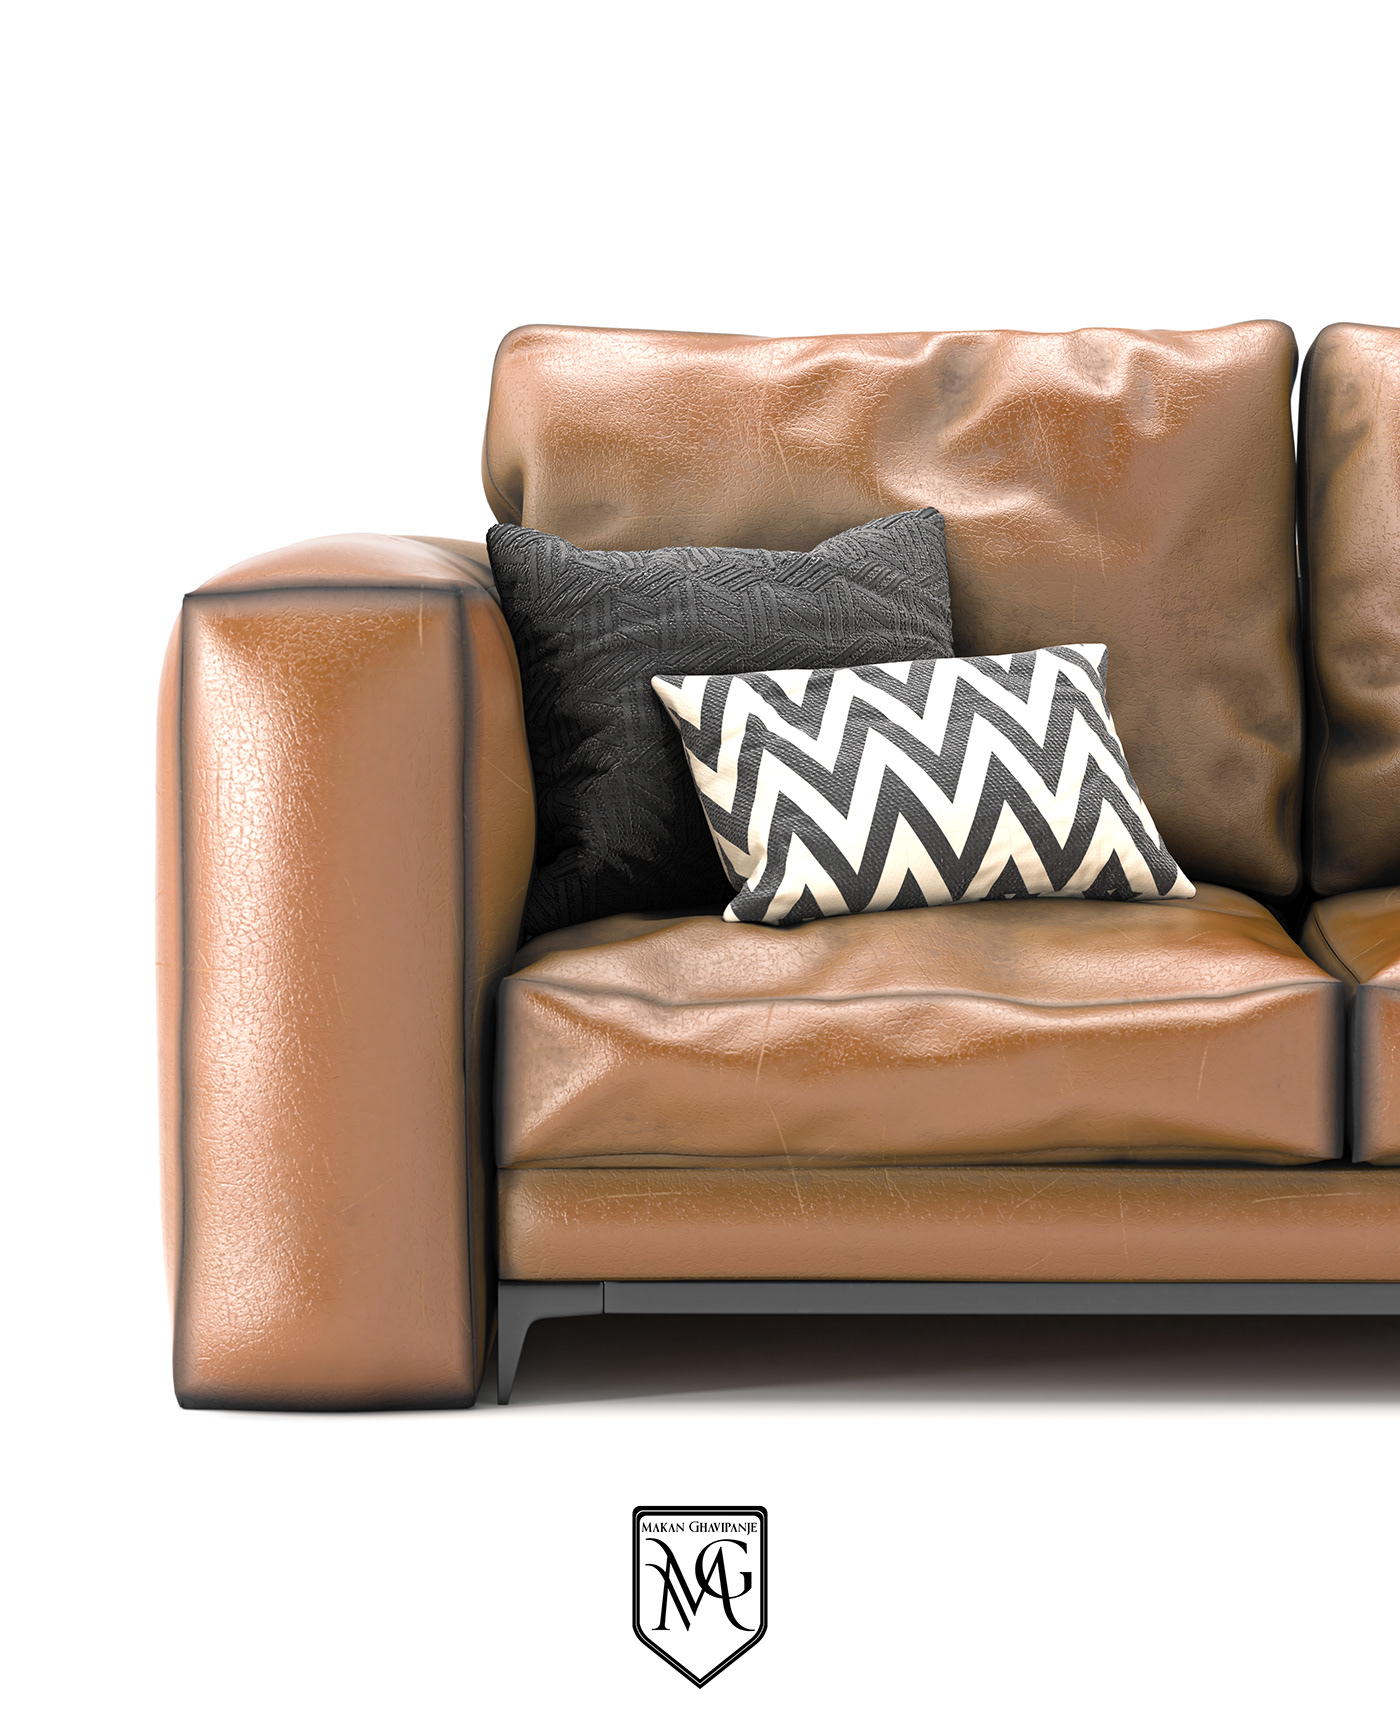 sofa furniture product design  Render architecture visualization 3ds max CGI archviz interior design 